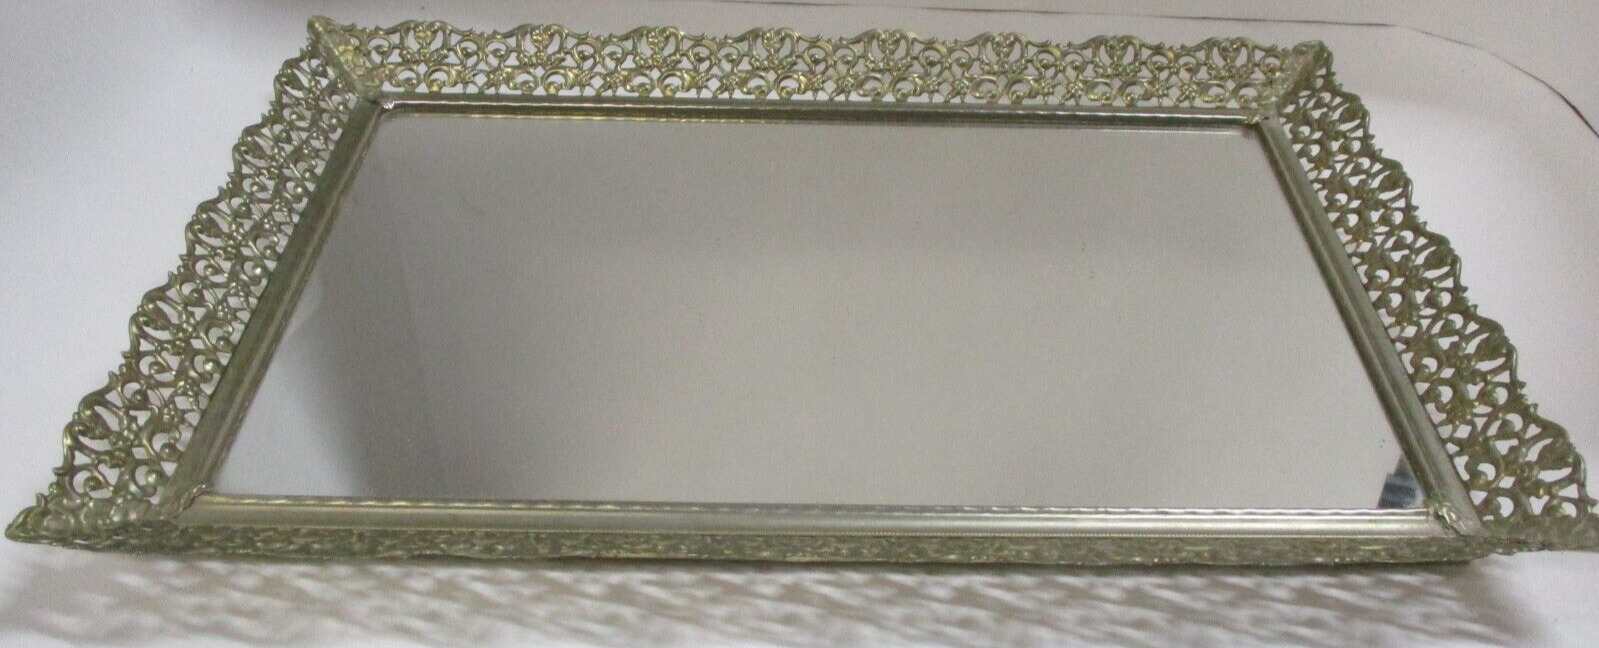 Vintage Ornate Edge Mirrored Dresser Tray 14.5\